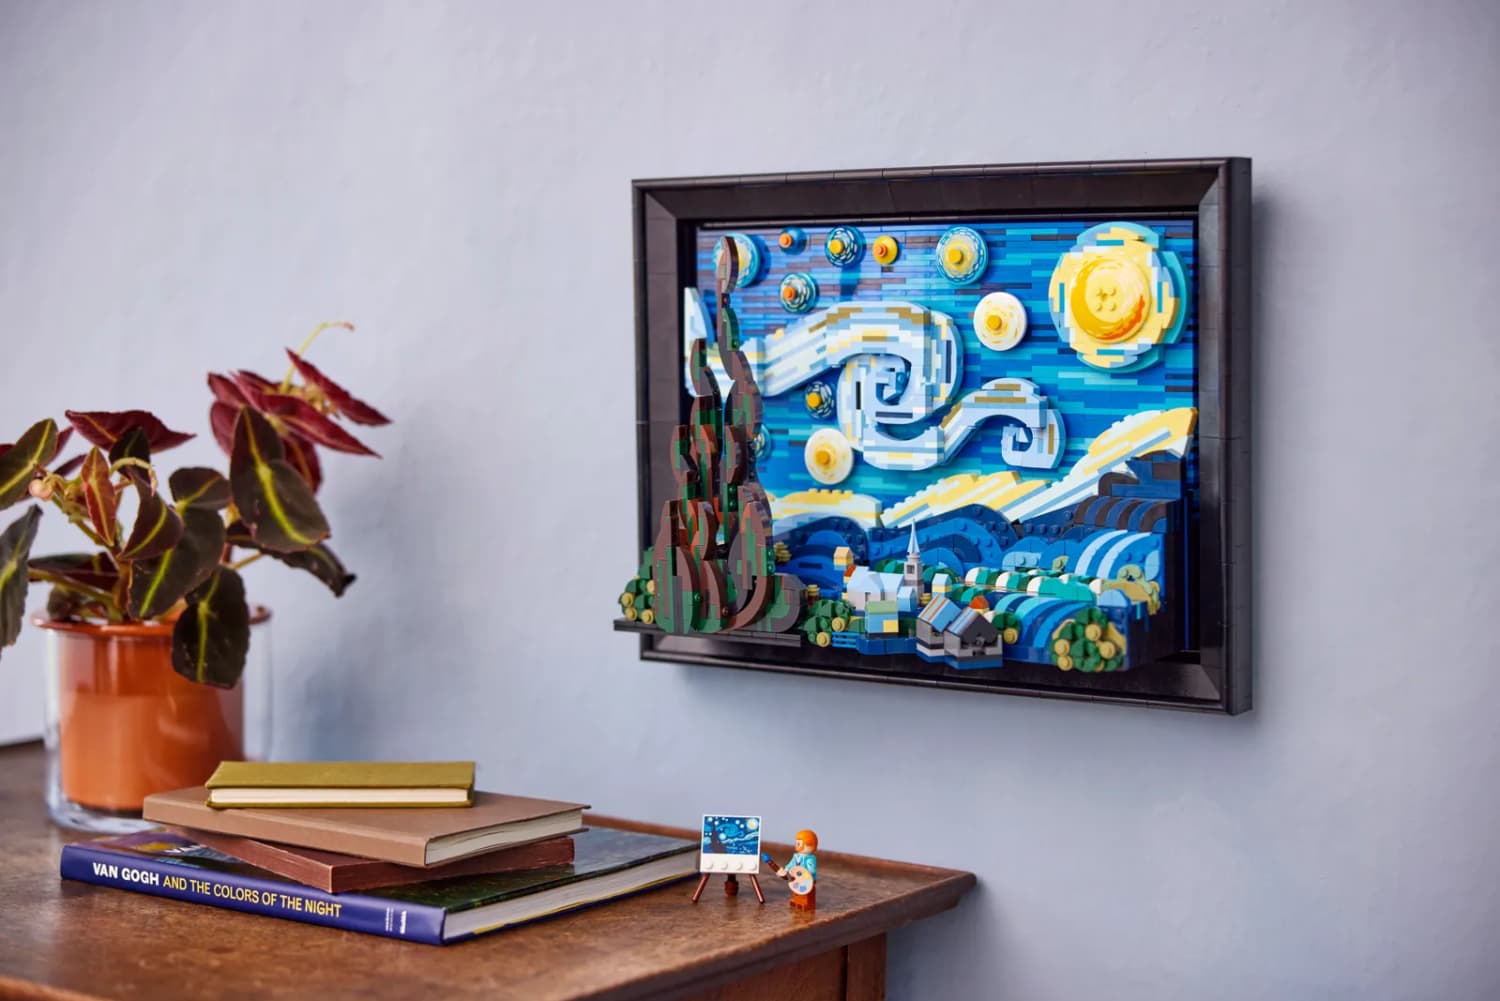 Finally, LEGO Will Release Van Gogh’s Long-Awaited ‘Starry Night’ Set